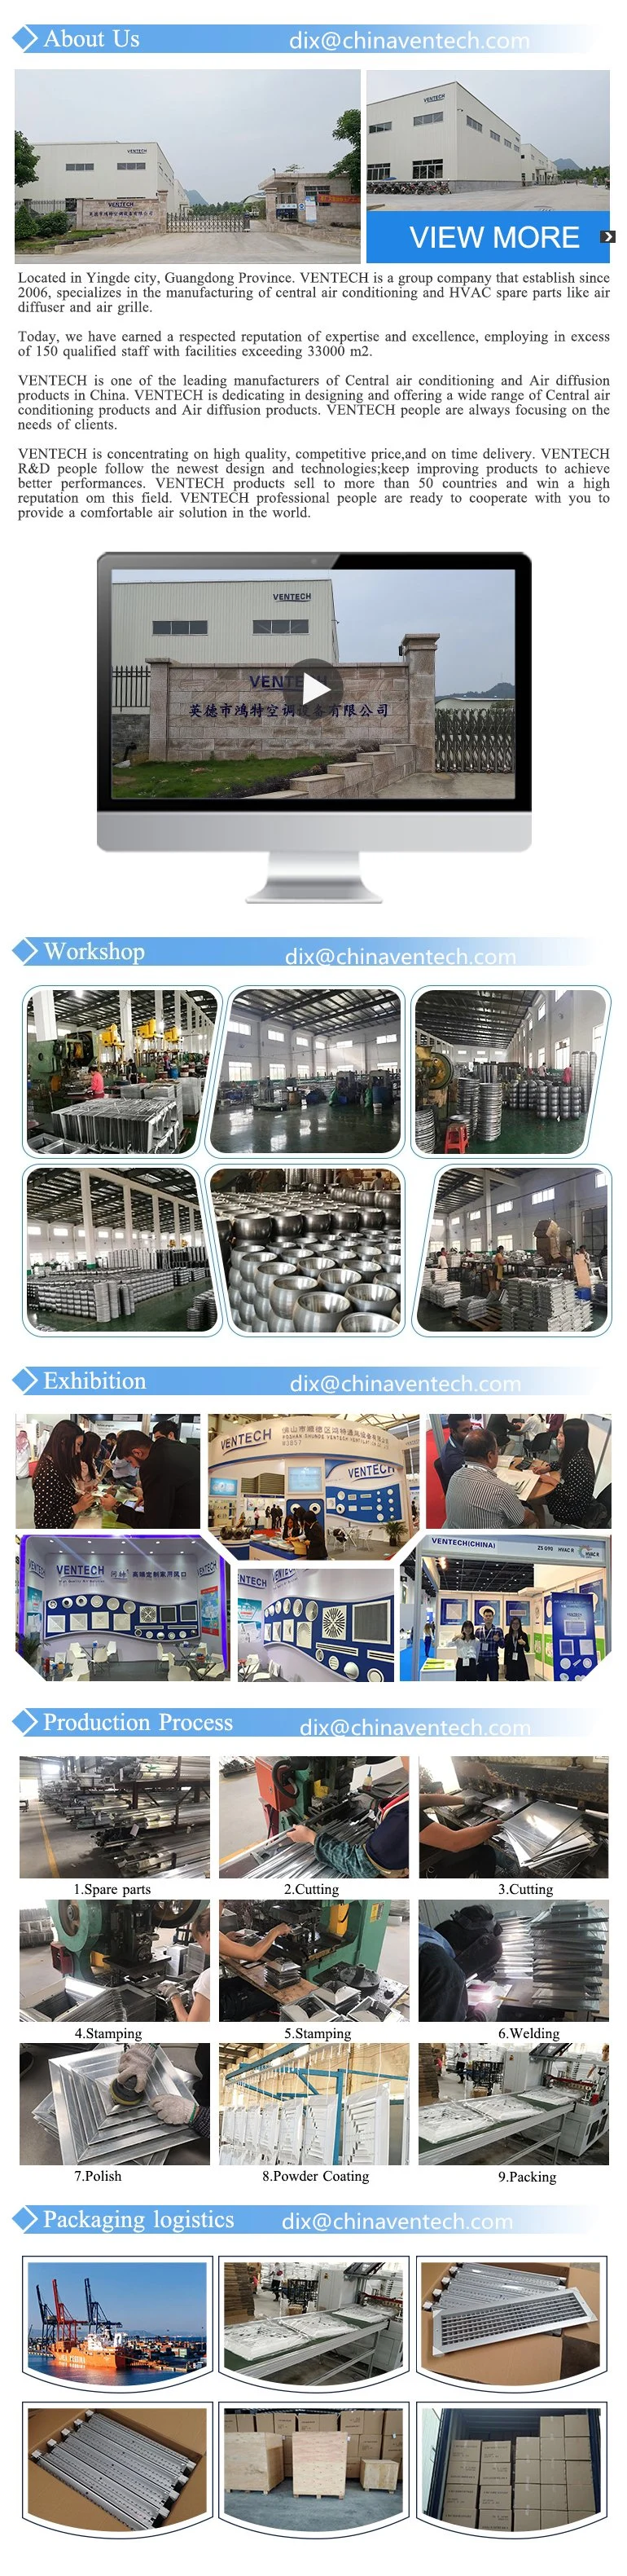 China Manufacturer Ventech Ventilation Aluminum Drum Louver Jet Supply Air Diffuser